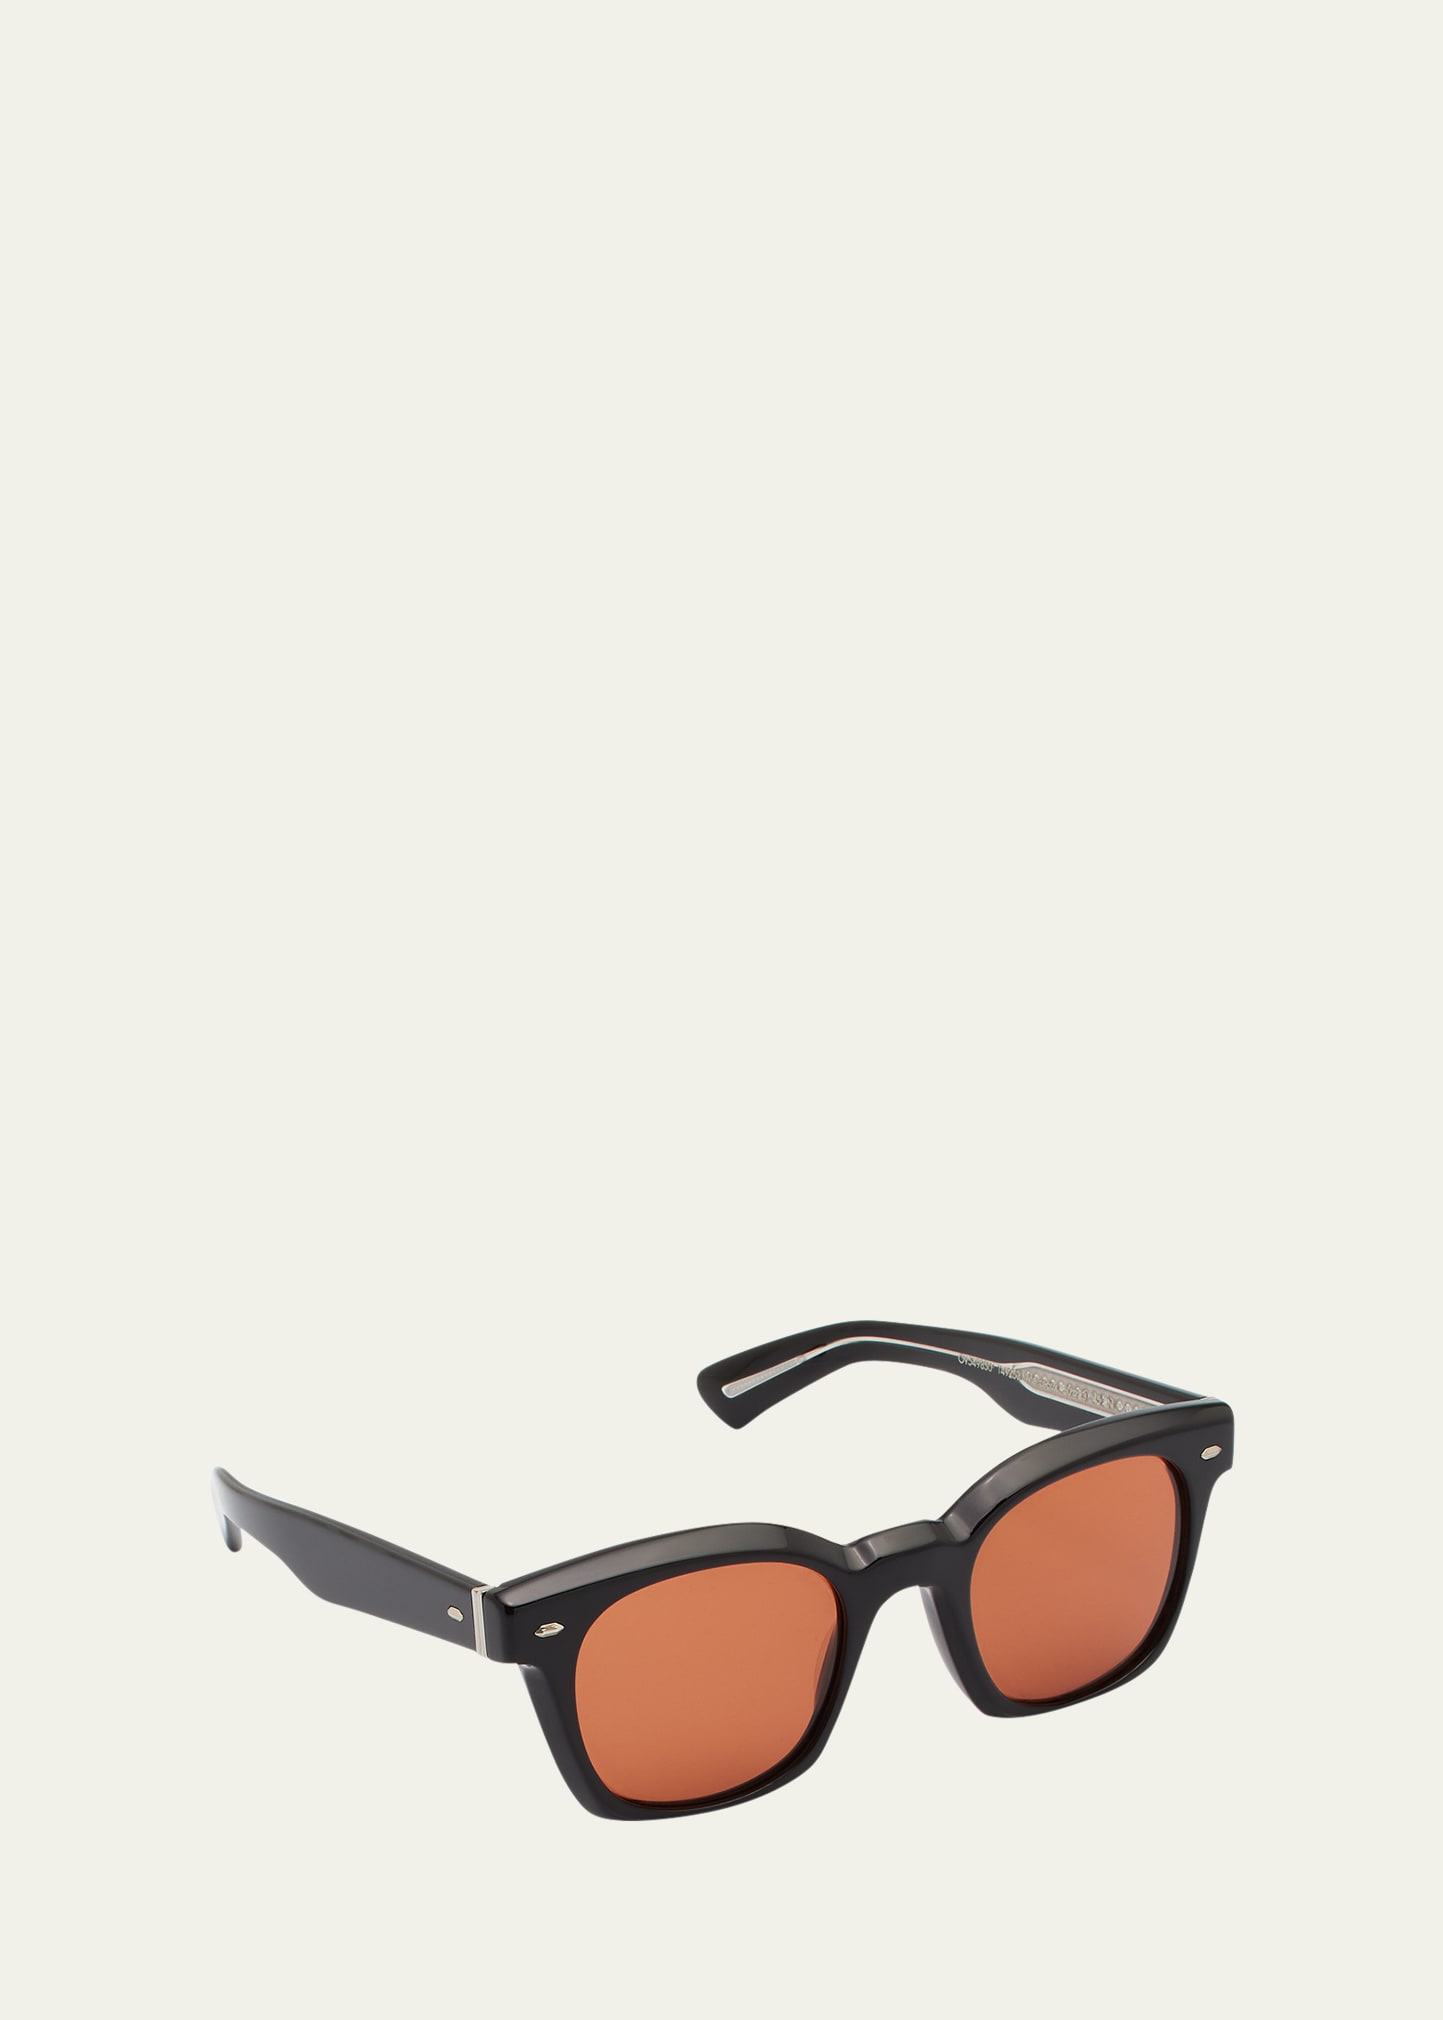 The Merceaux Square Sunglasses